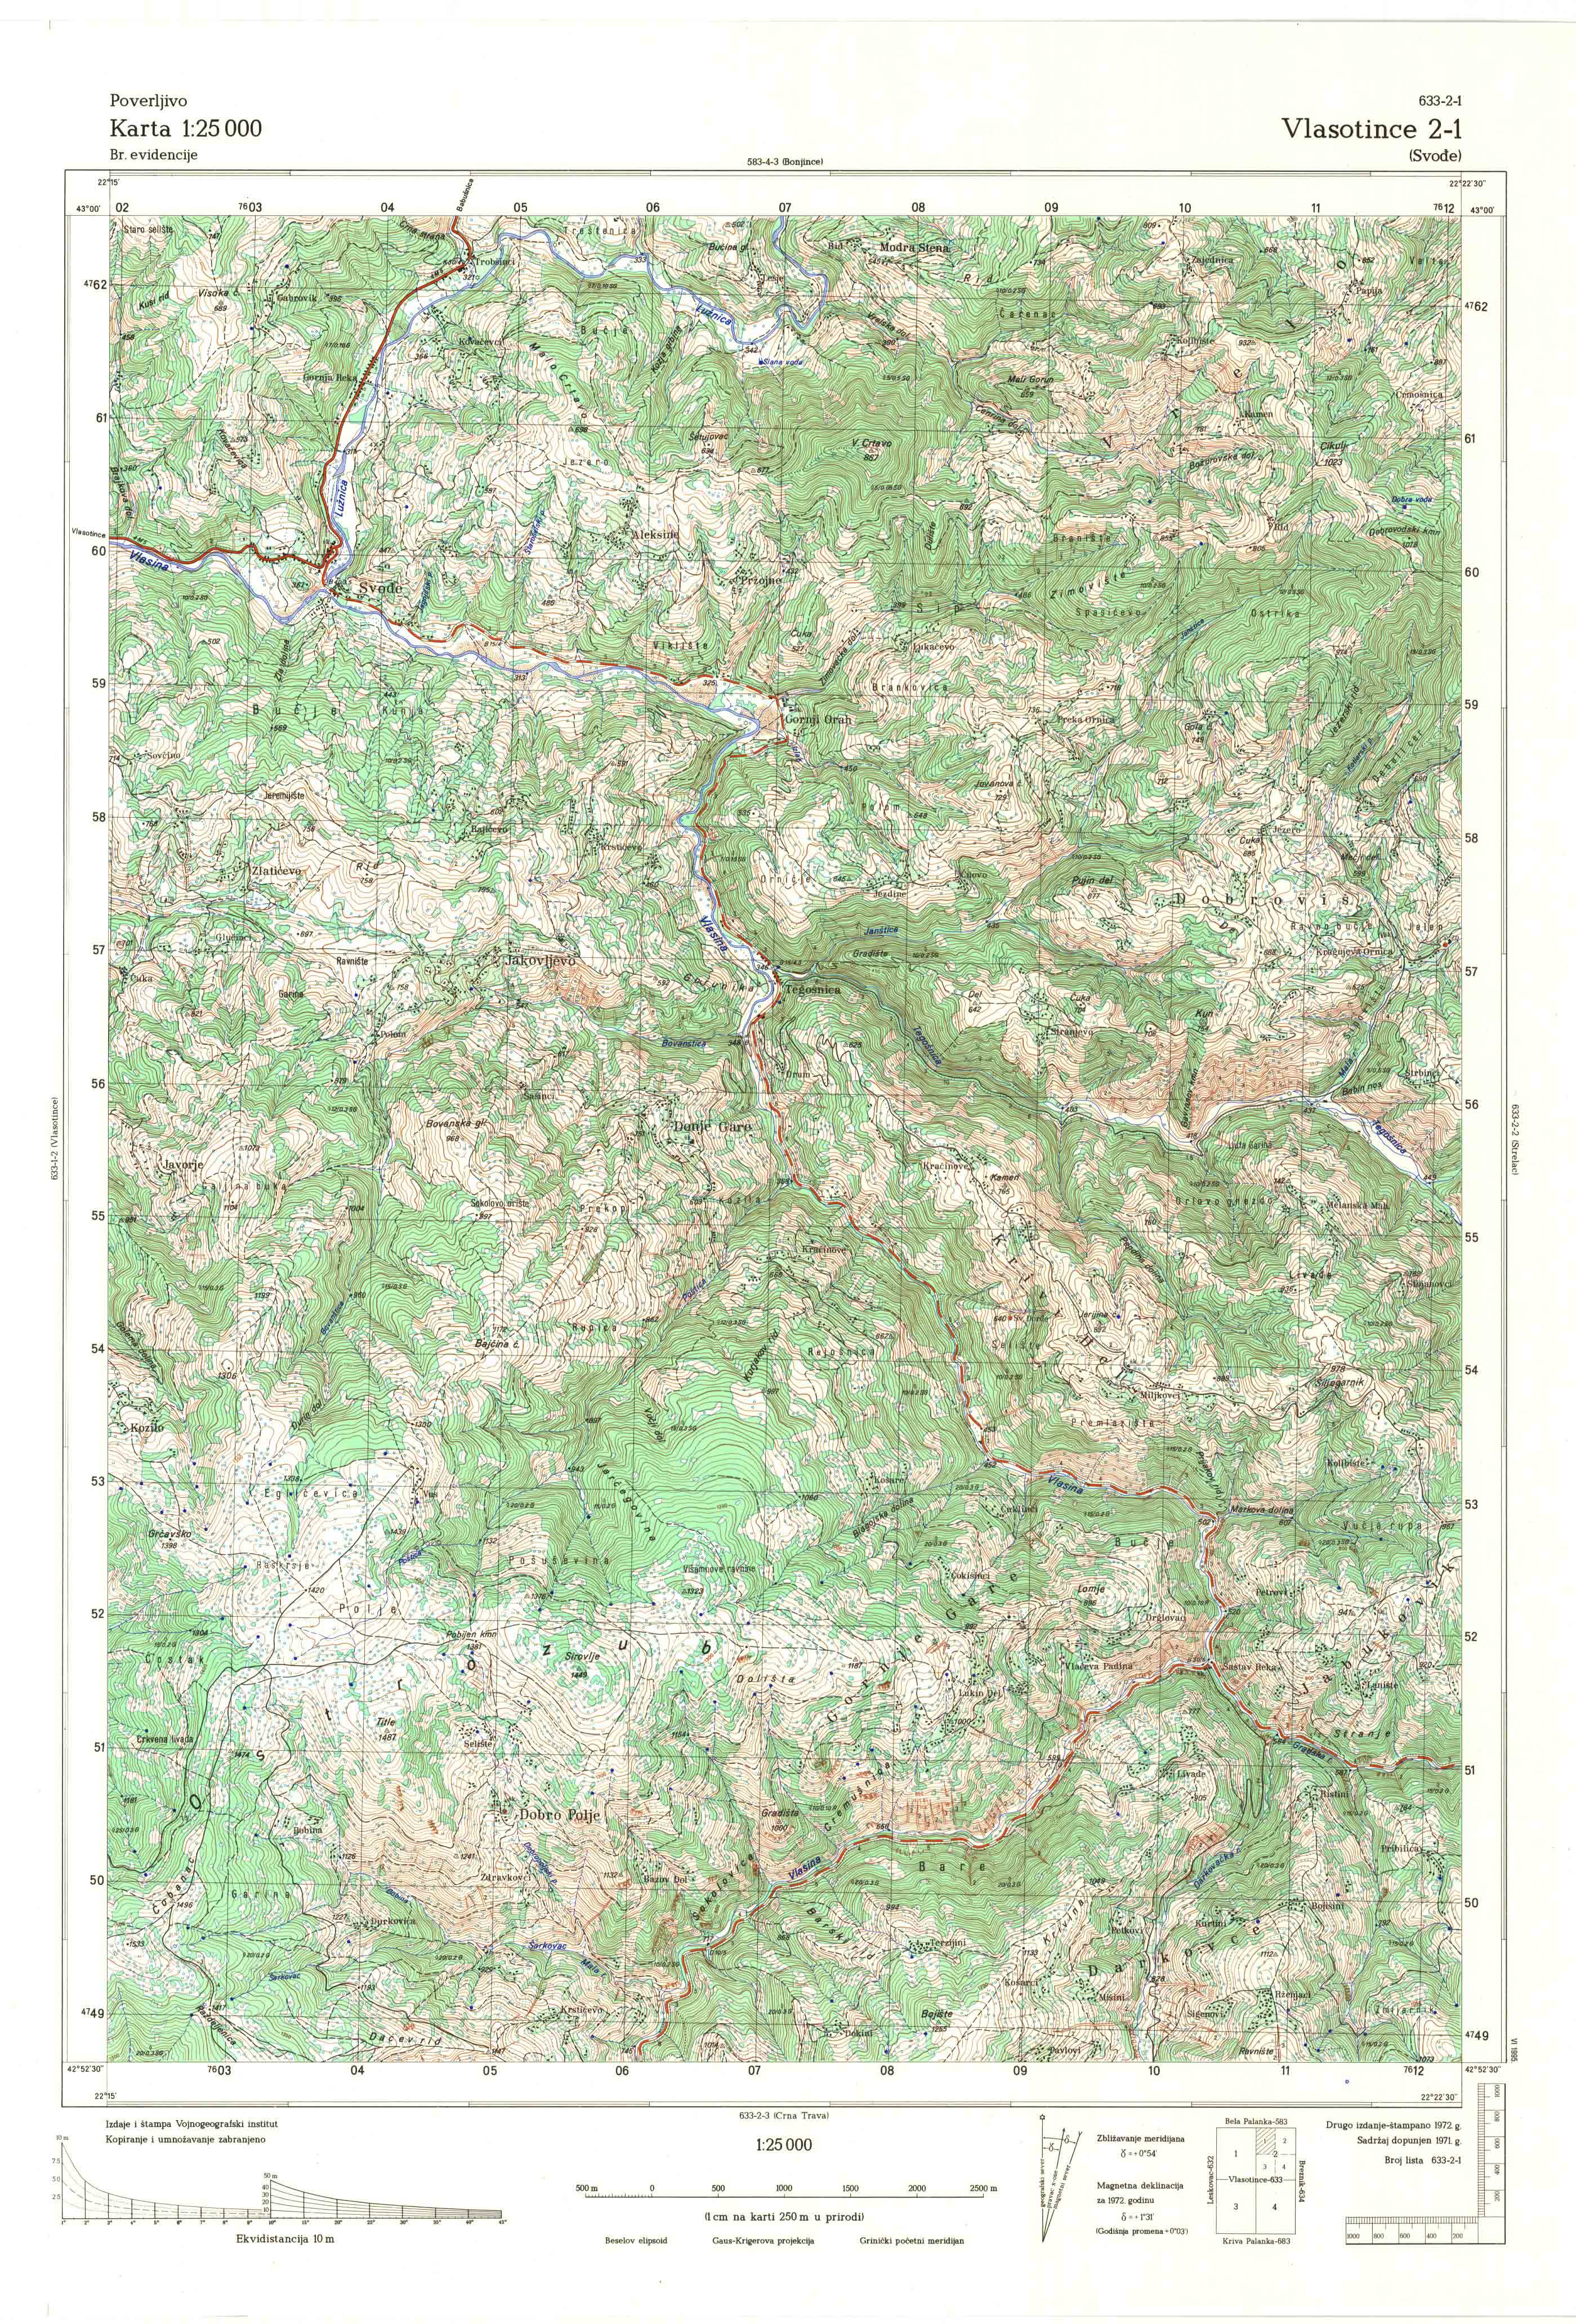  topografska karta srbije 25000 JNA  Vlasotince